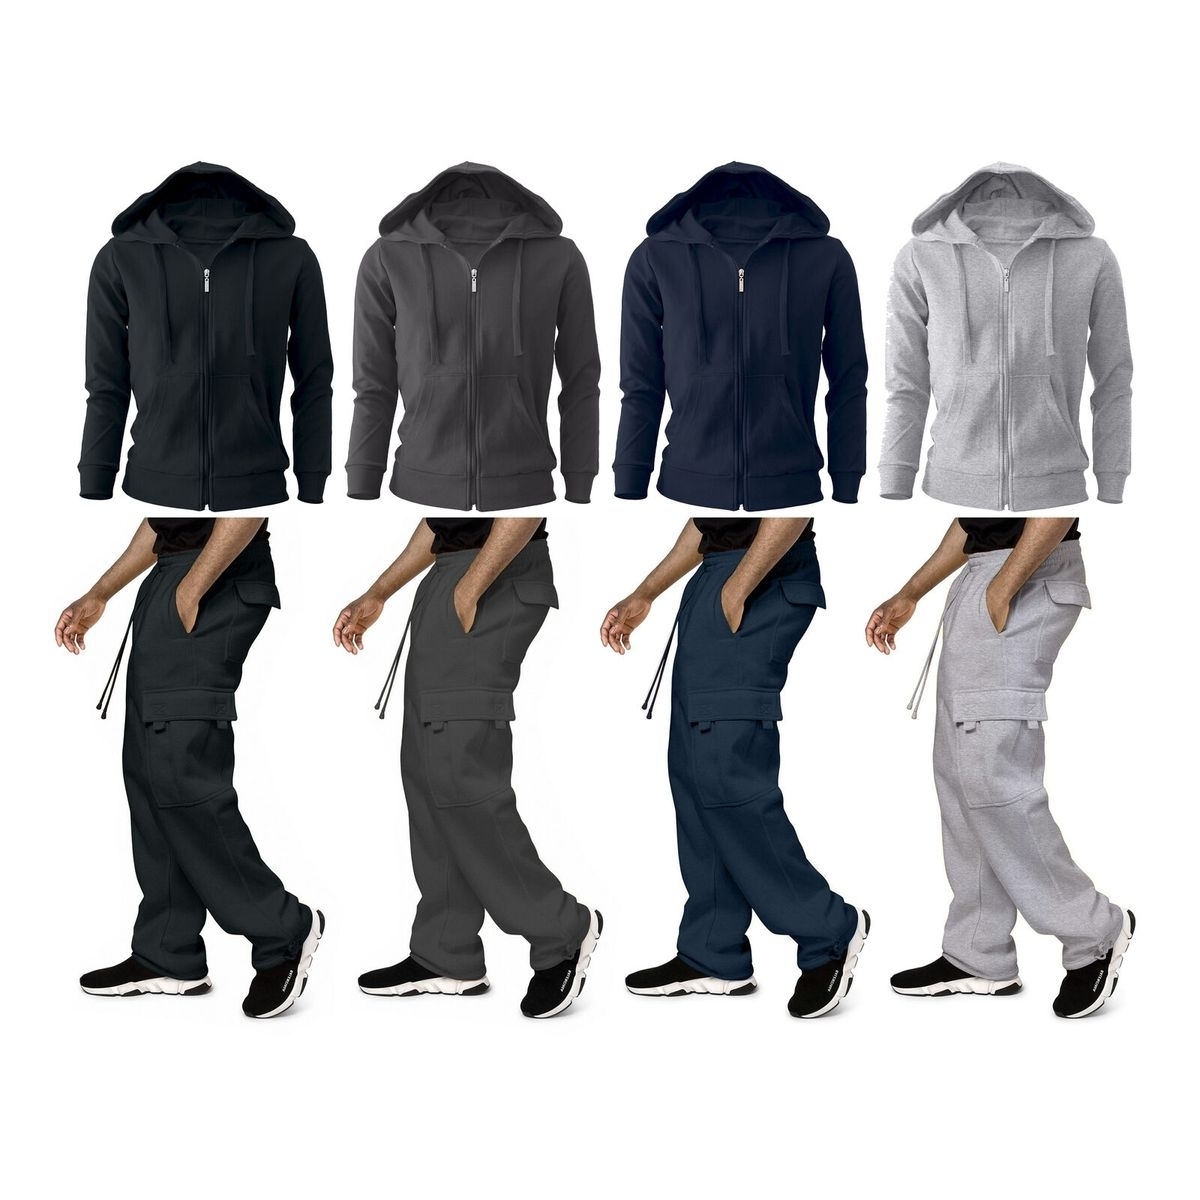 Multi-Pack: Men's Big & Tall Winter Warm Athletic Active Cozy Fleece Lined Multi-Pocket Full Zip Up Cargo Tracksuit - Black, 2-pack, Medium